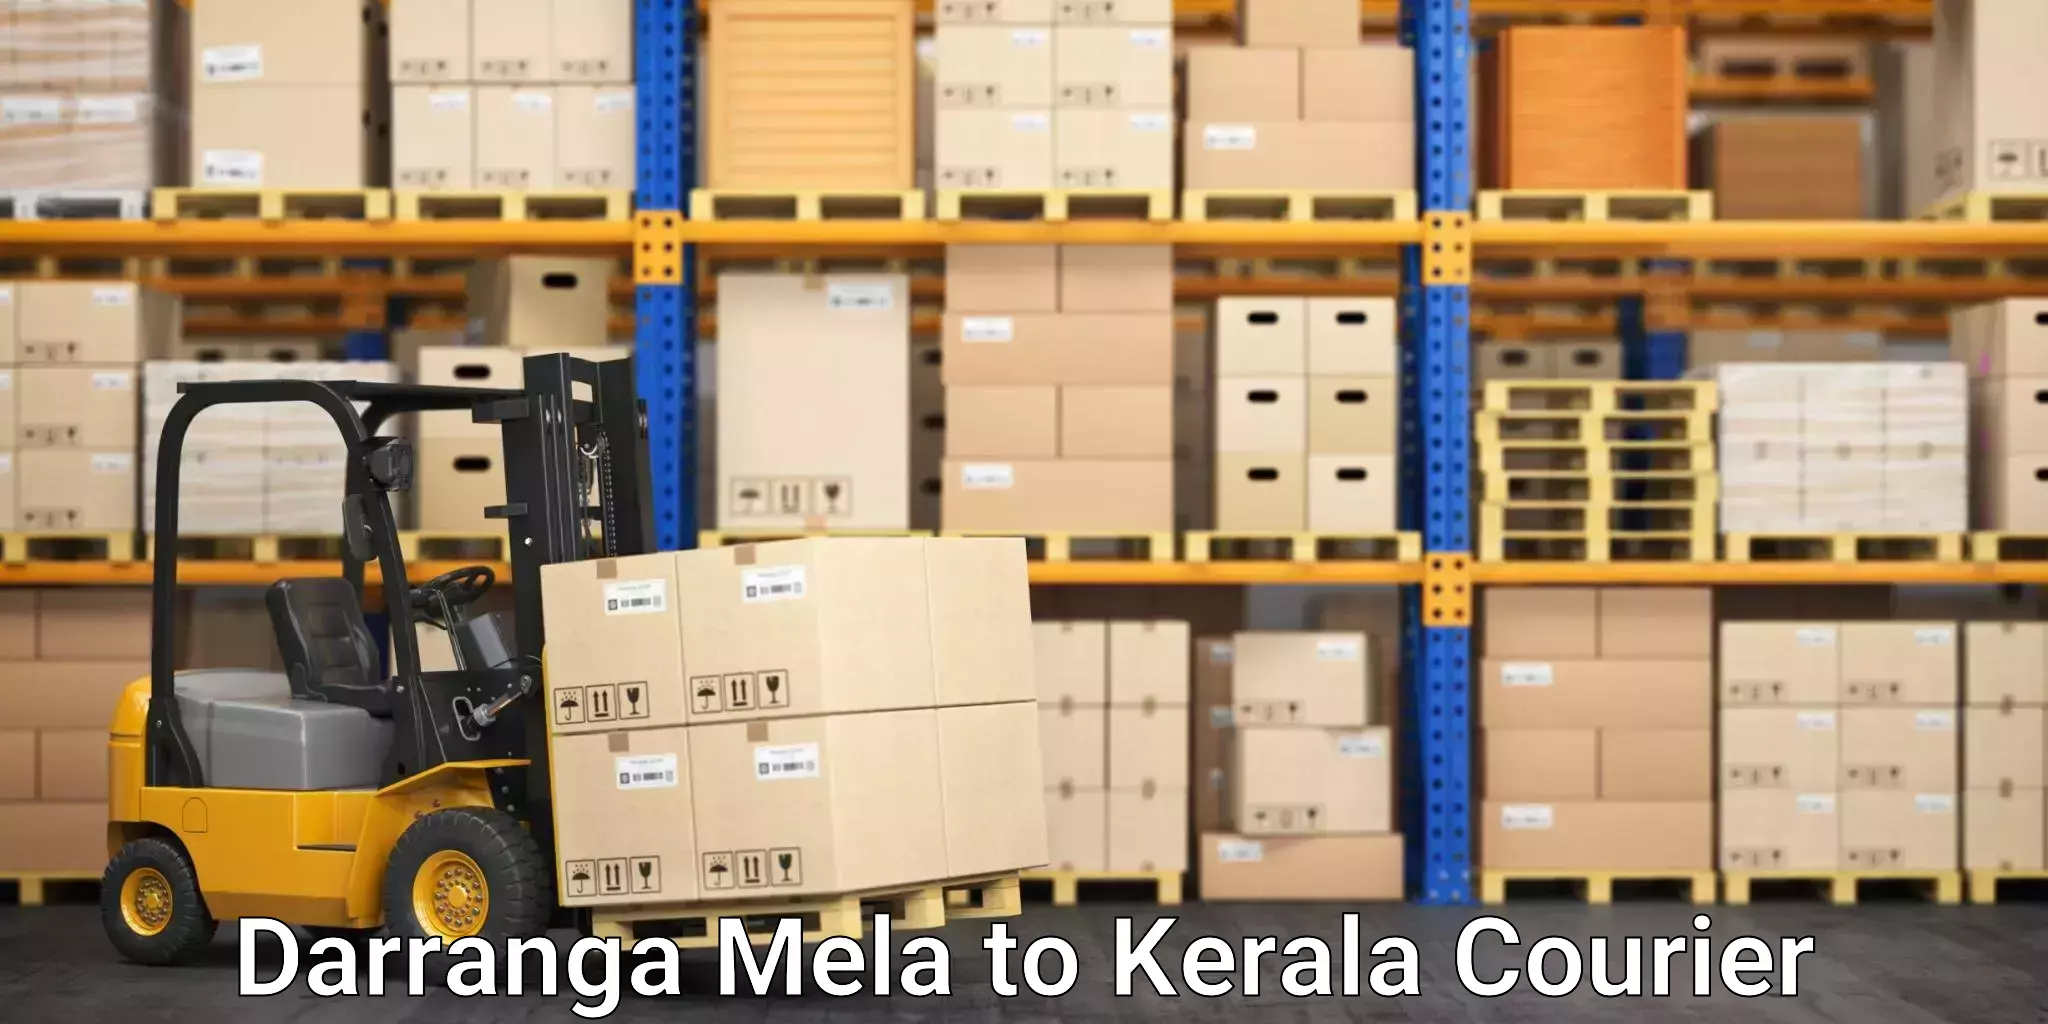 Expedited parcel delivery Darranga Mela to Aluva